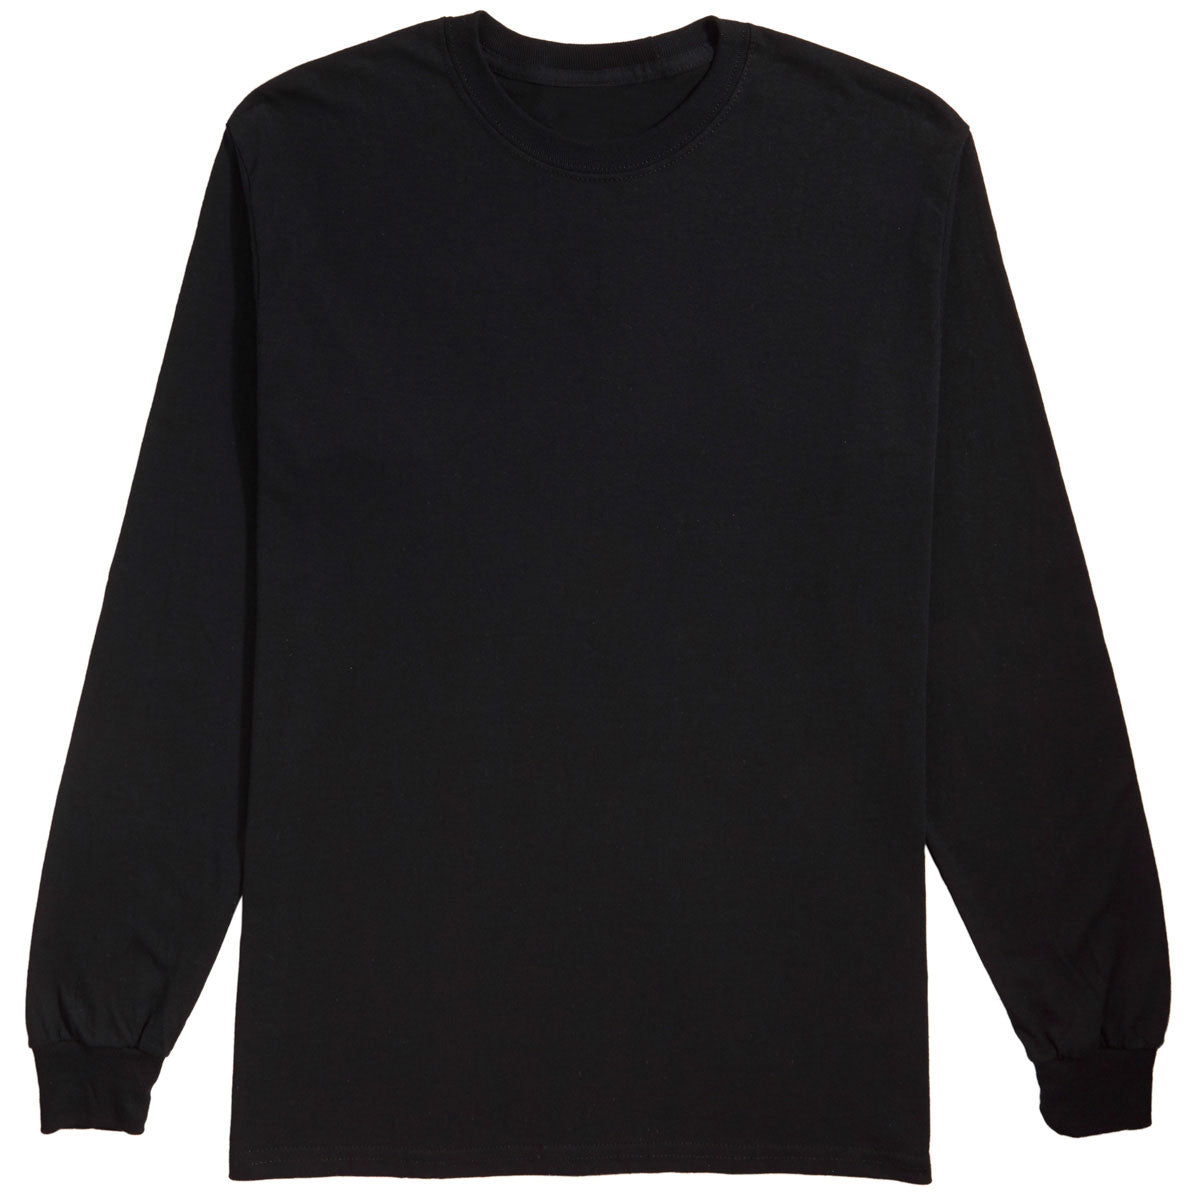 Habitat Crest Long Sleeve T-Shirt - Black - XL image 1